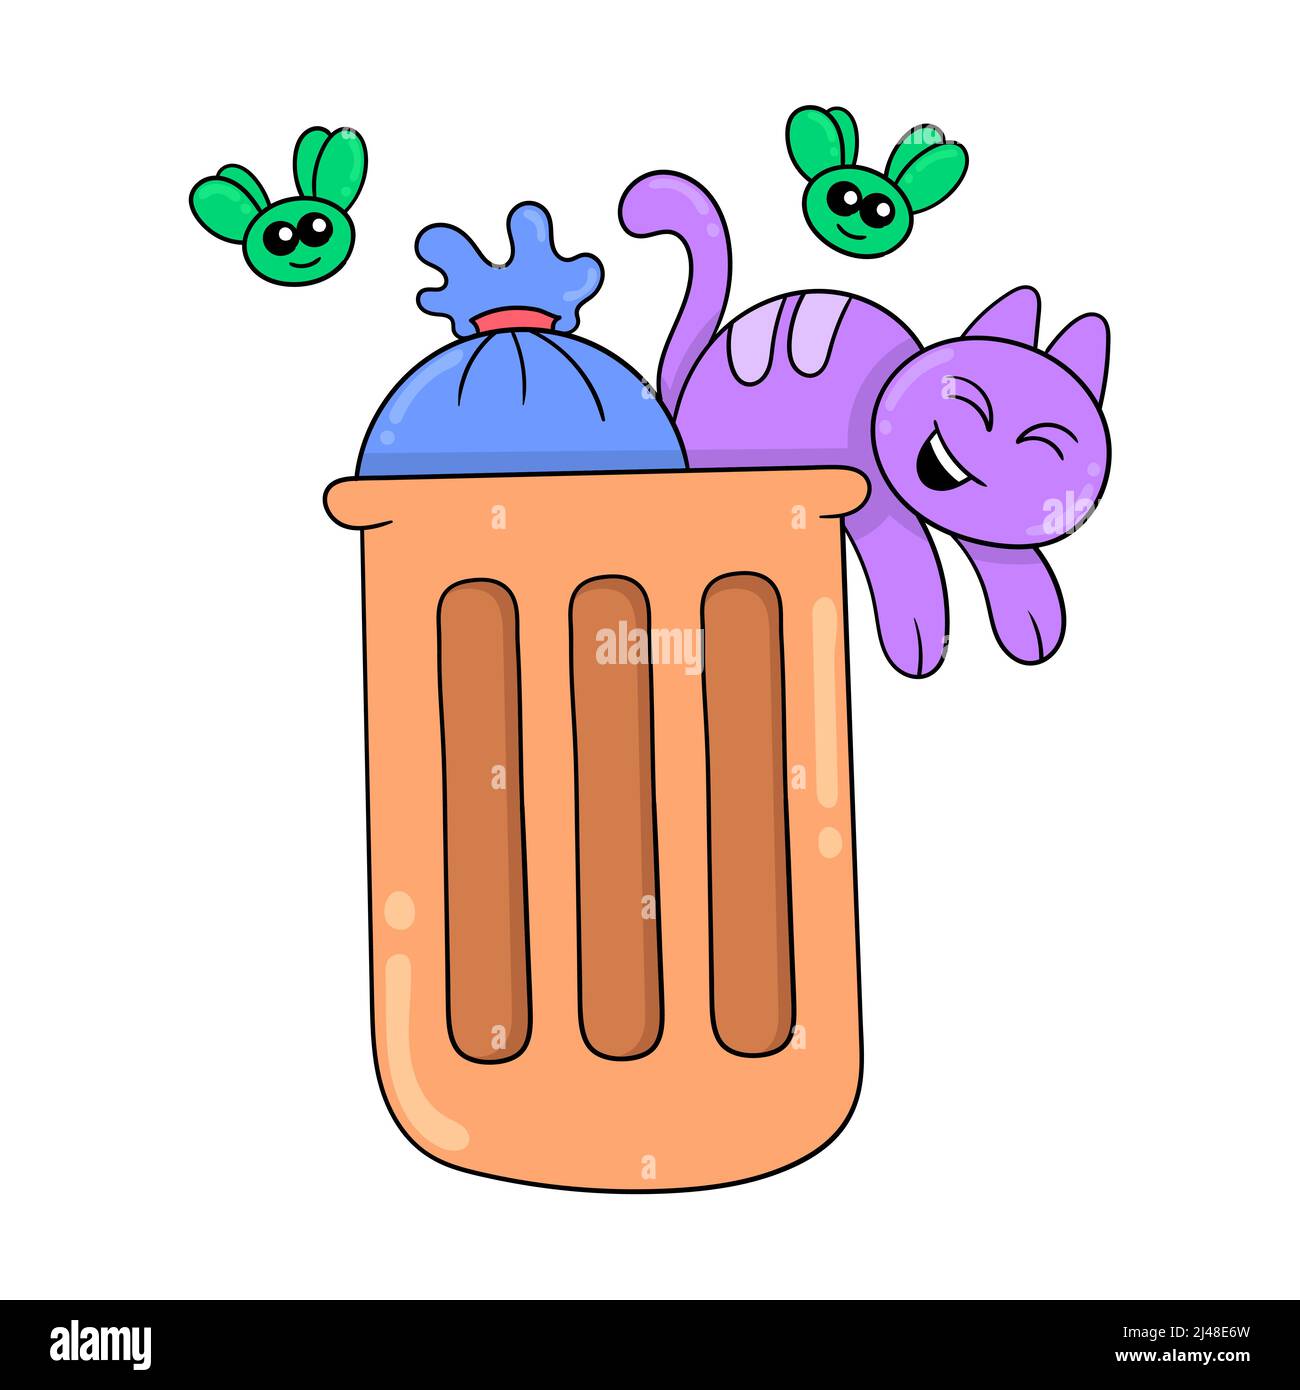 Trash Can Cartoon Images – Browse 23,969 Stock Photos, Vectors